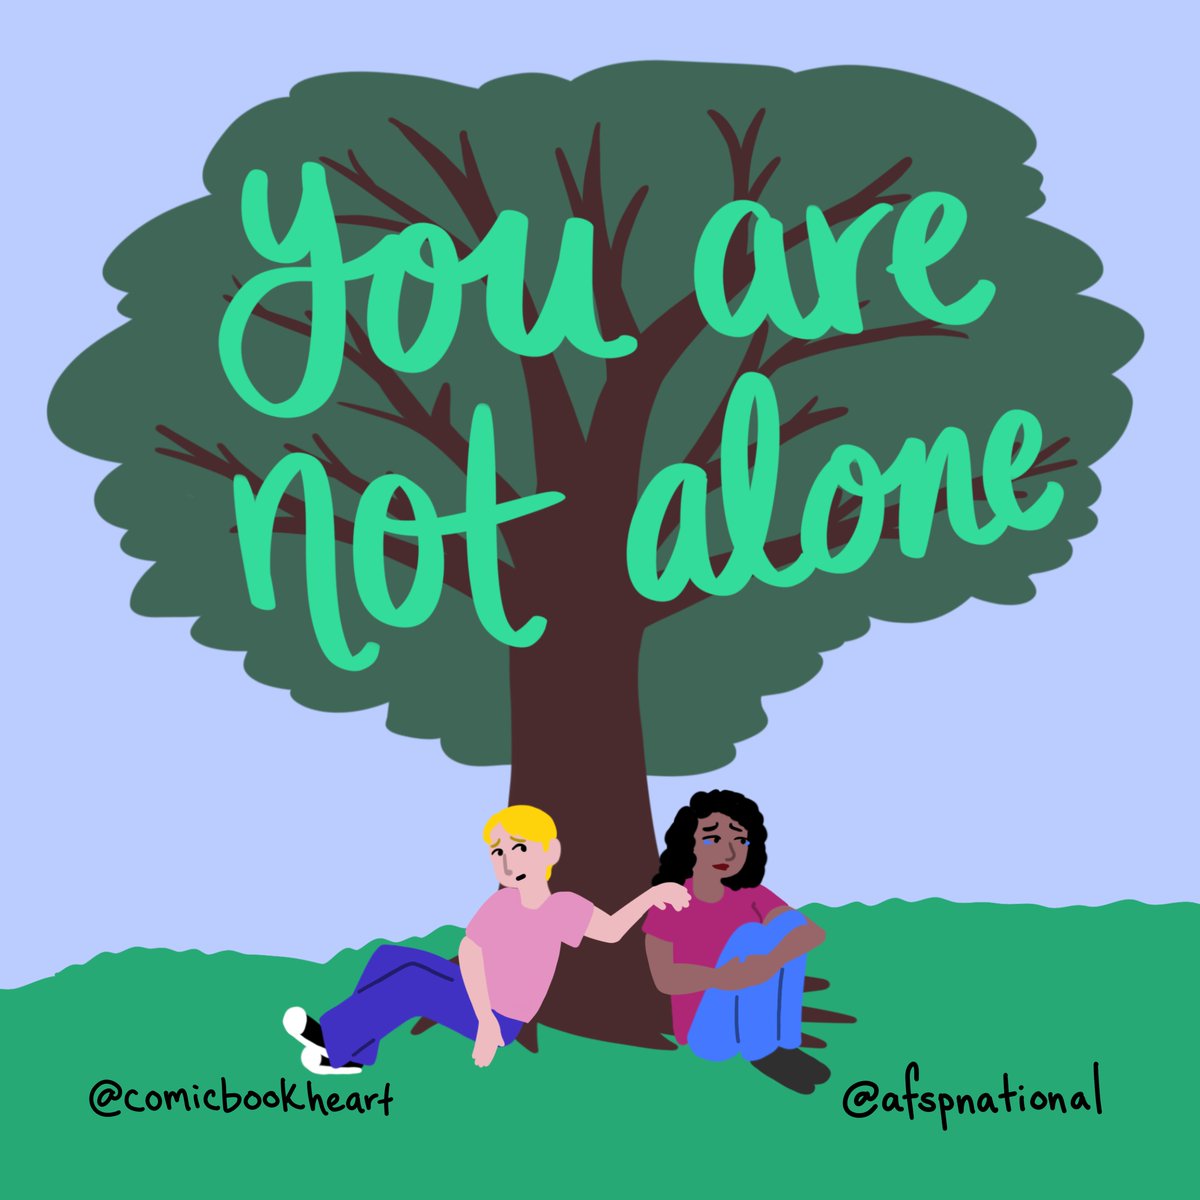 Your mental health matters. And you are never alone. 

#MentalHealthMatters #OkayToNotBeOkay #NeverAlone